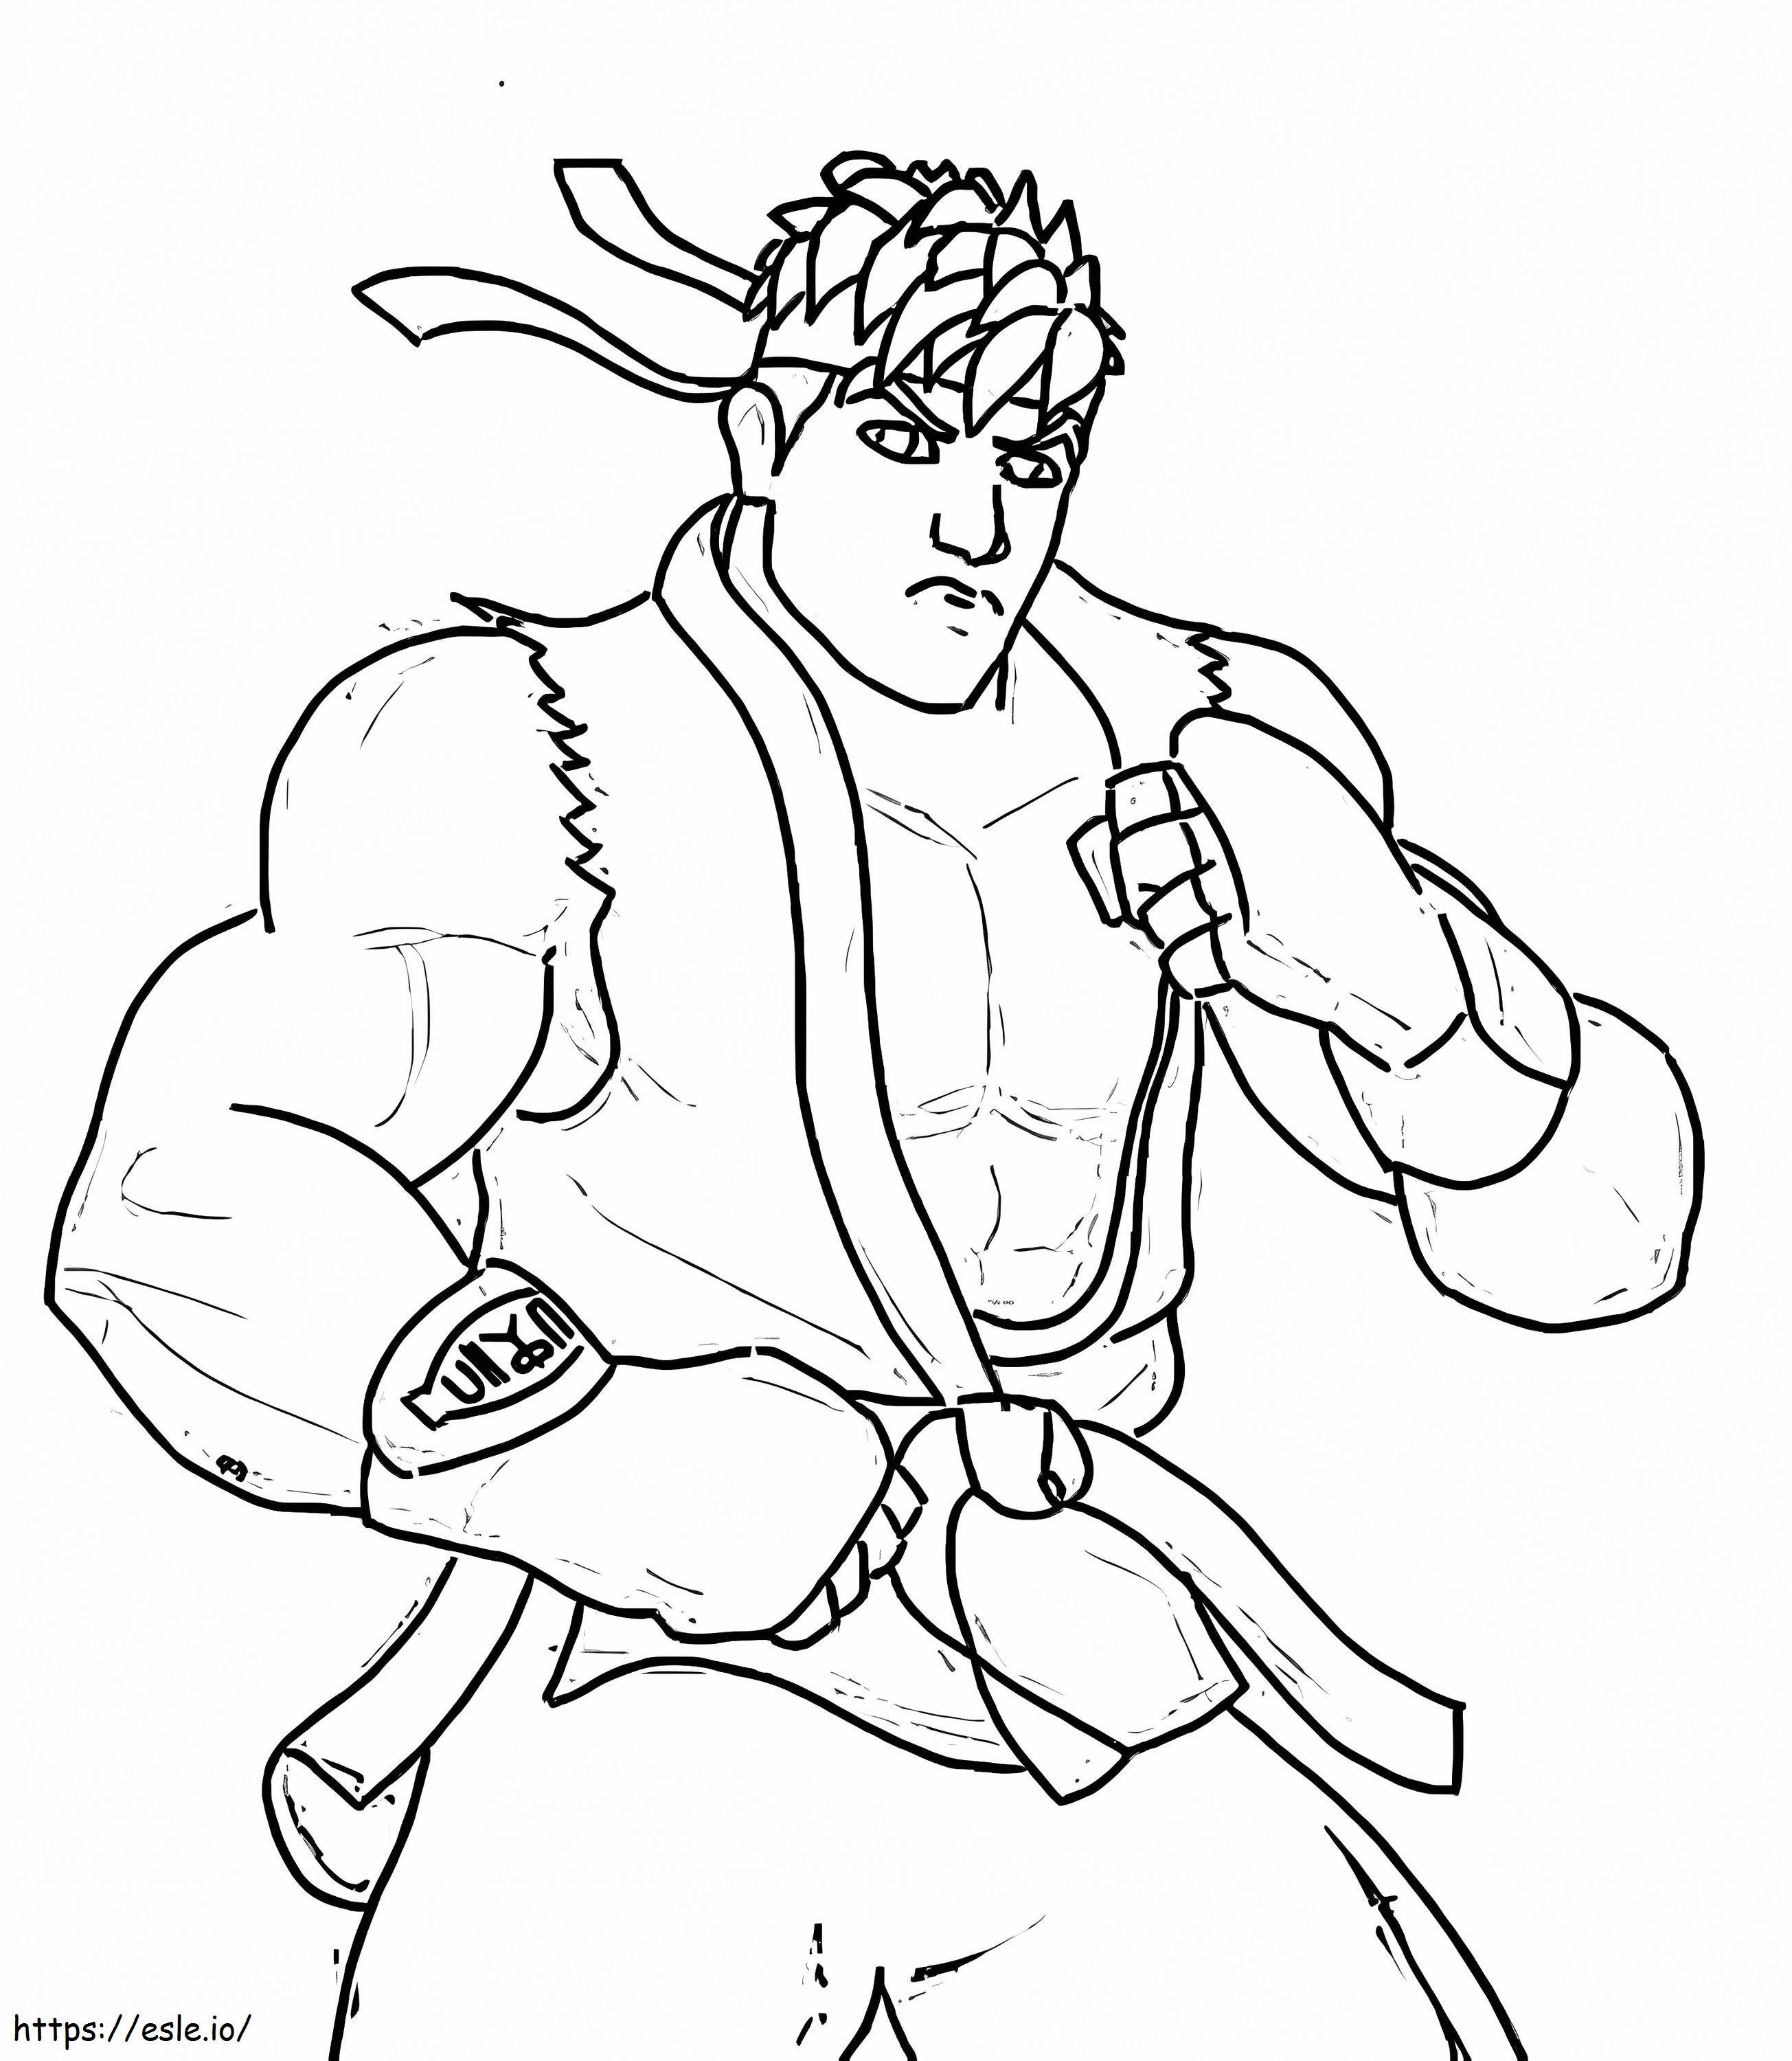 Basic Ryu coloring page